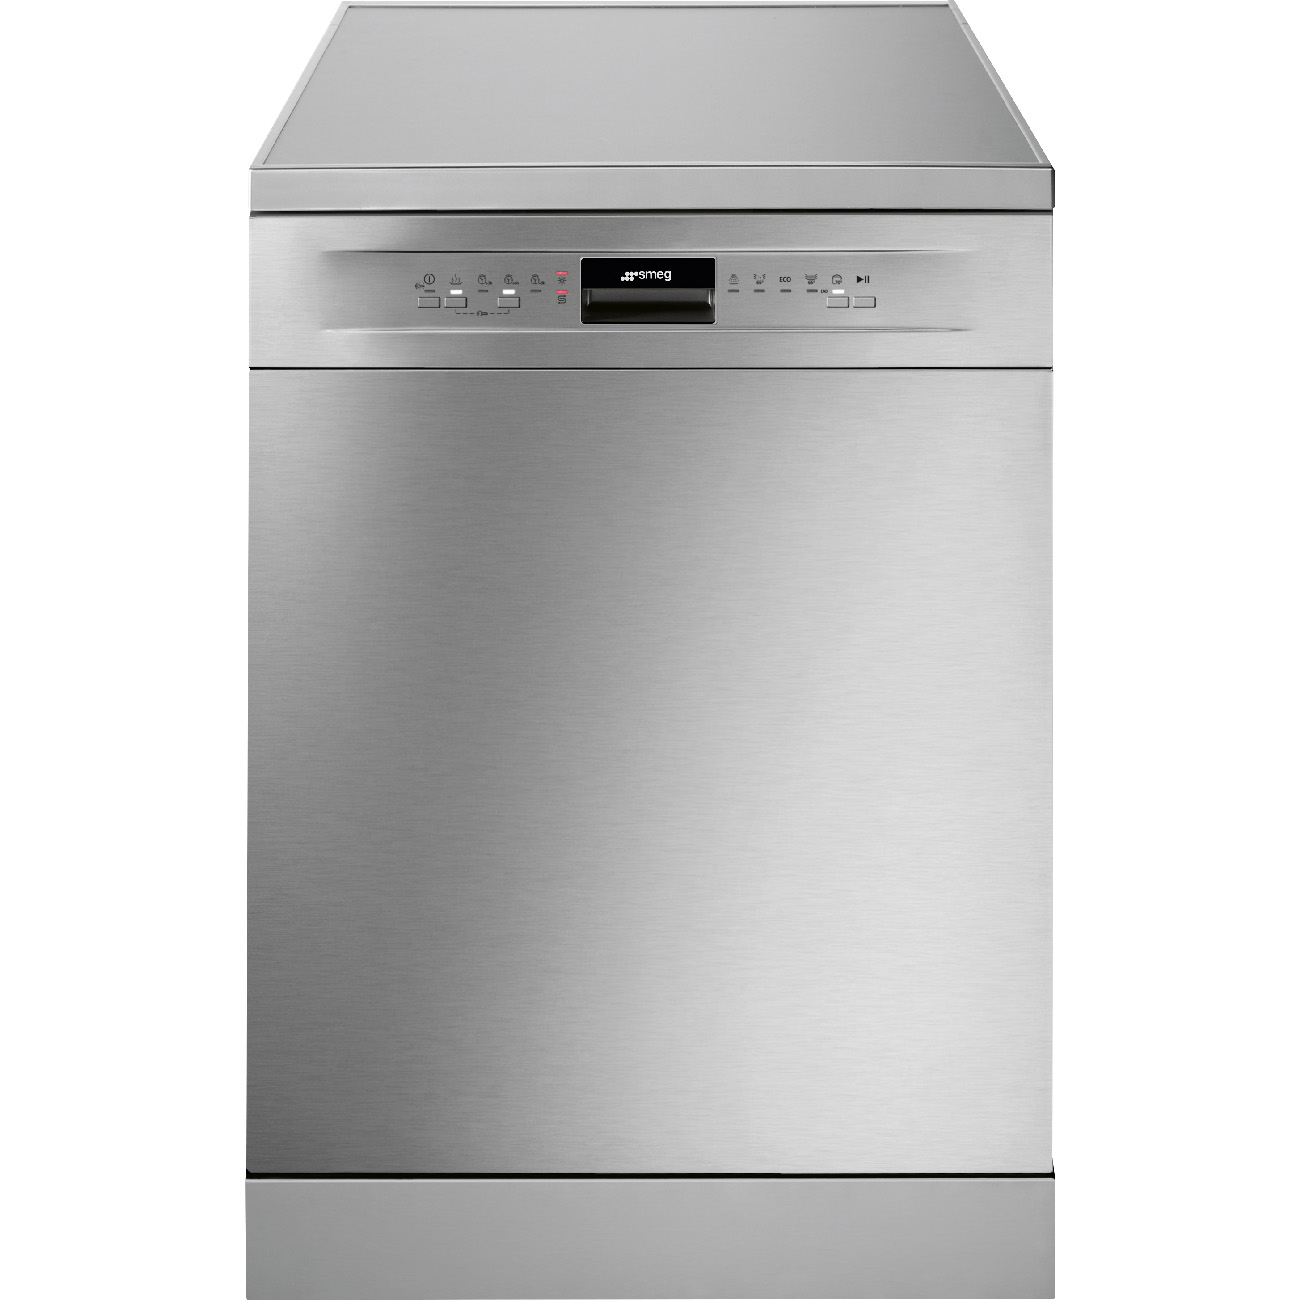 Free-standing dishwasher 60 cm Smeg_1